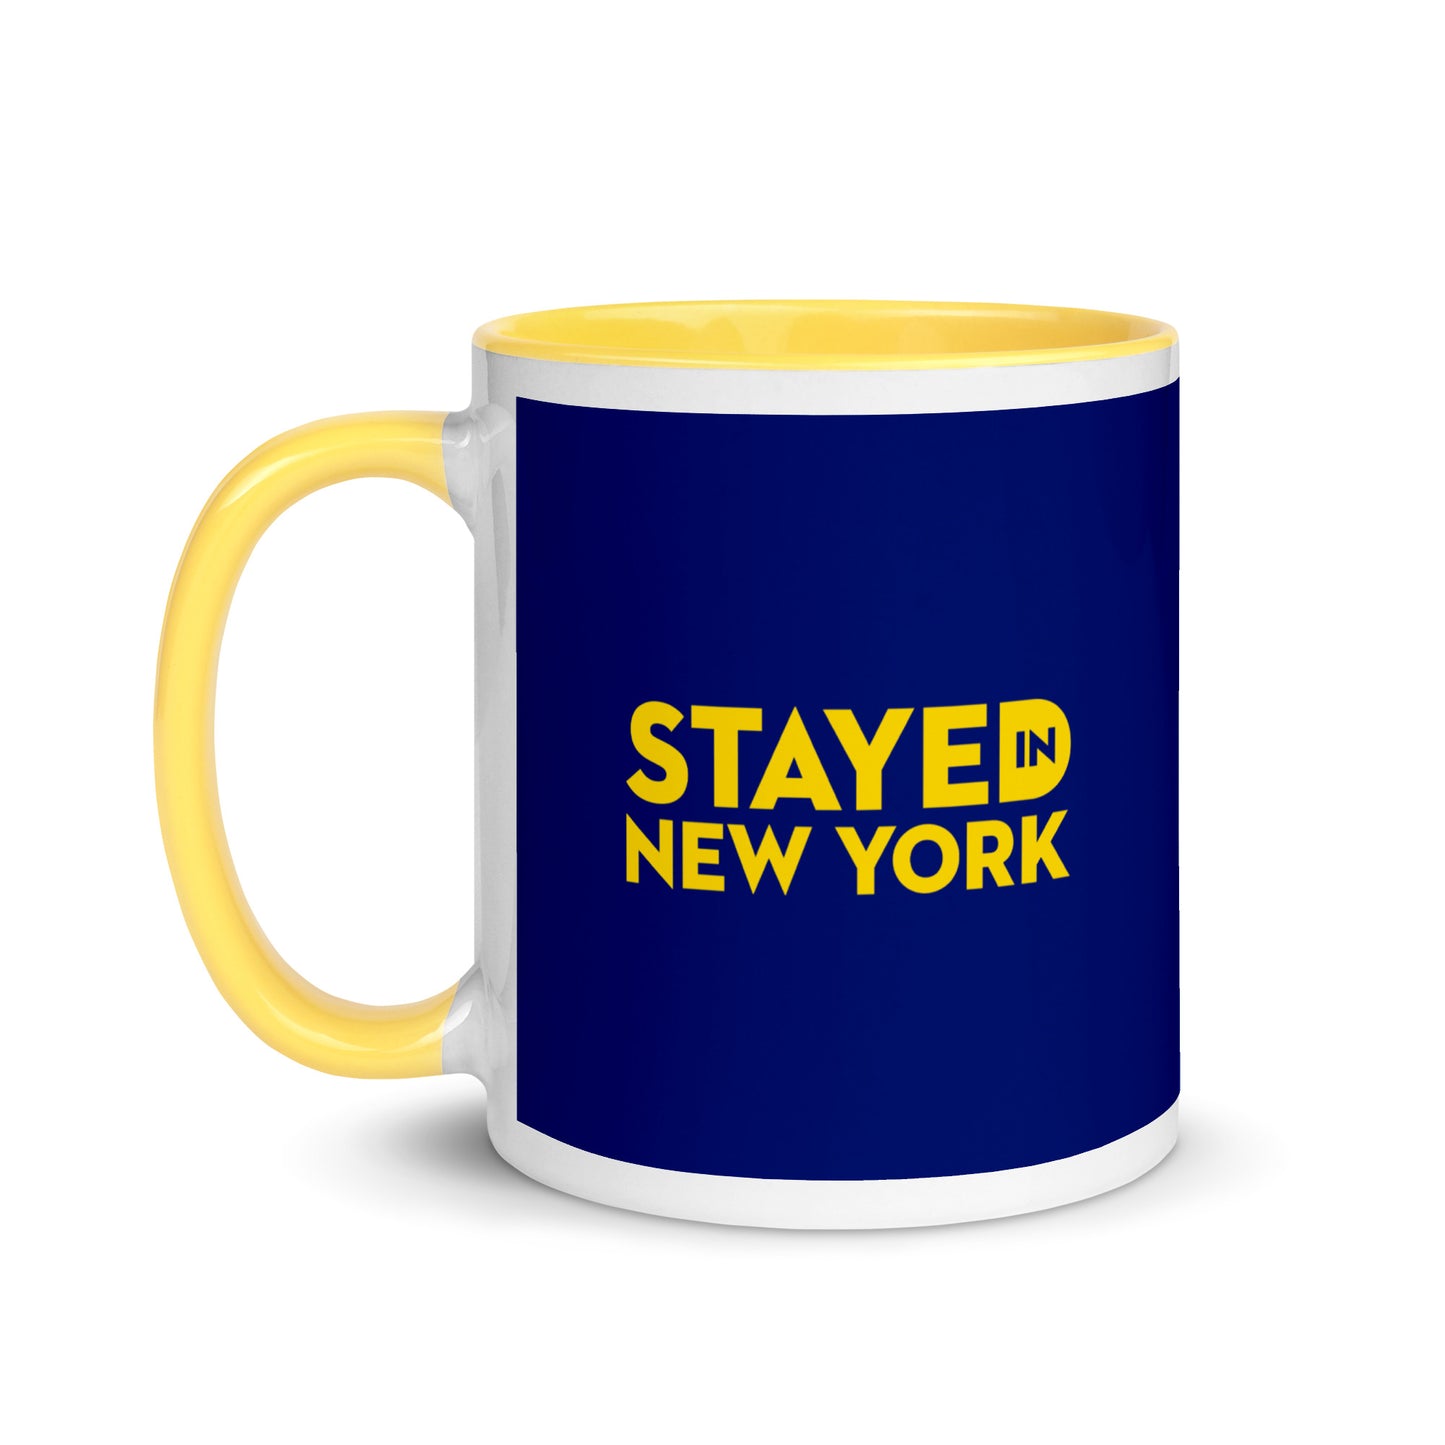 Stayed in New York / Coffee Mug